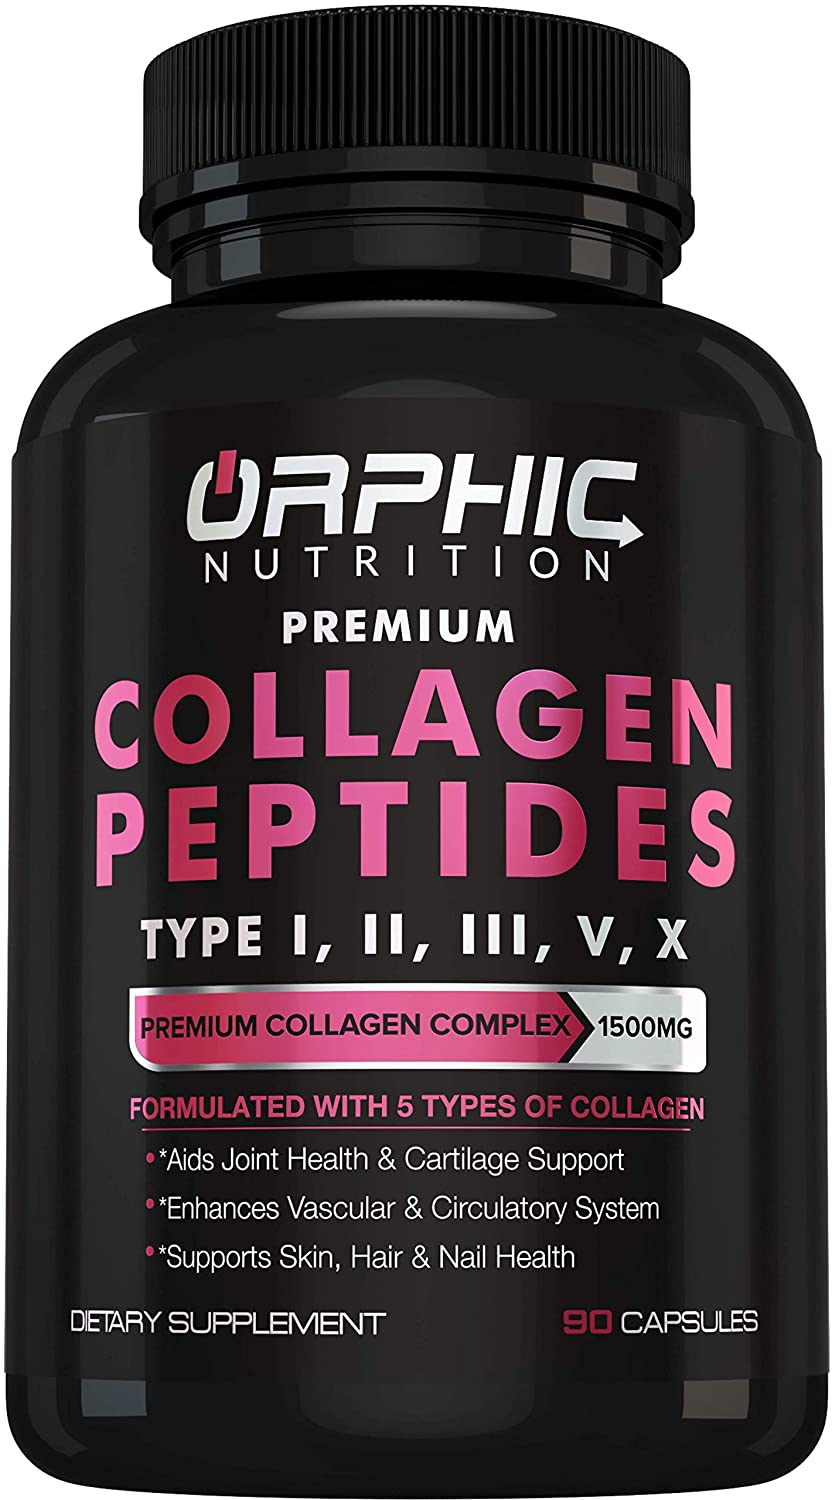 9. Orphic Nutrition Collagen Peptides Capsules